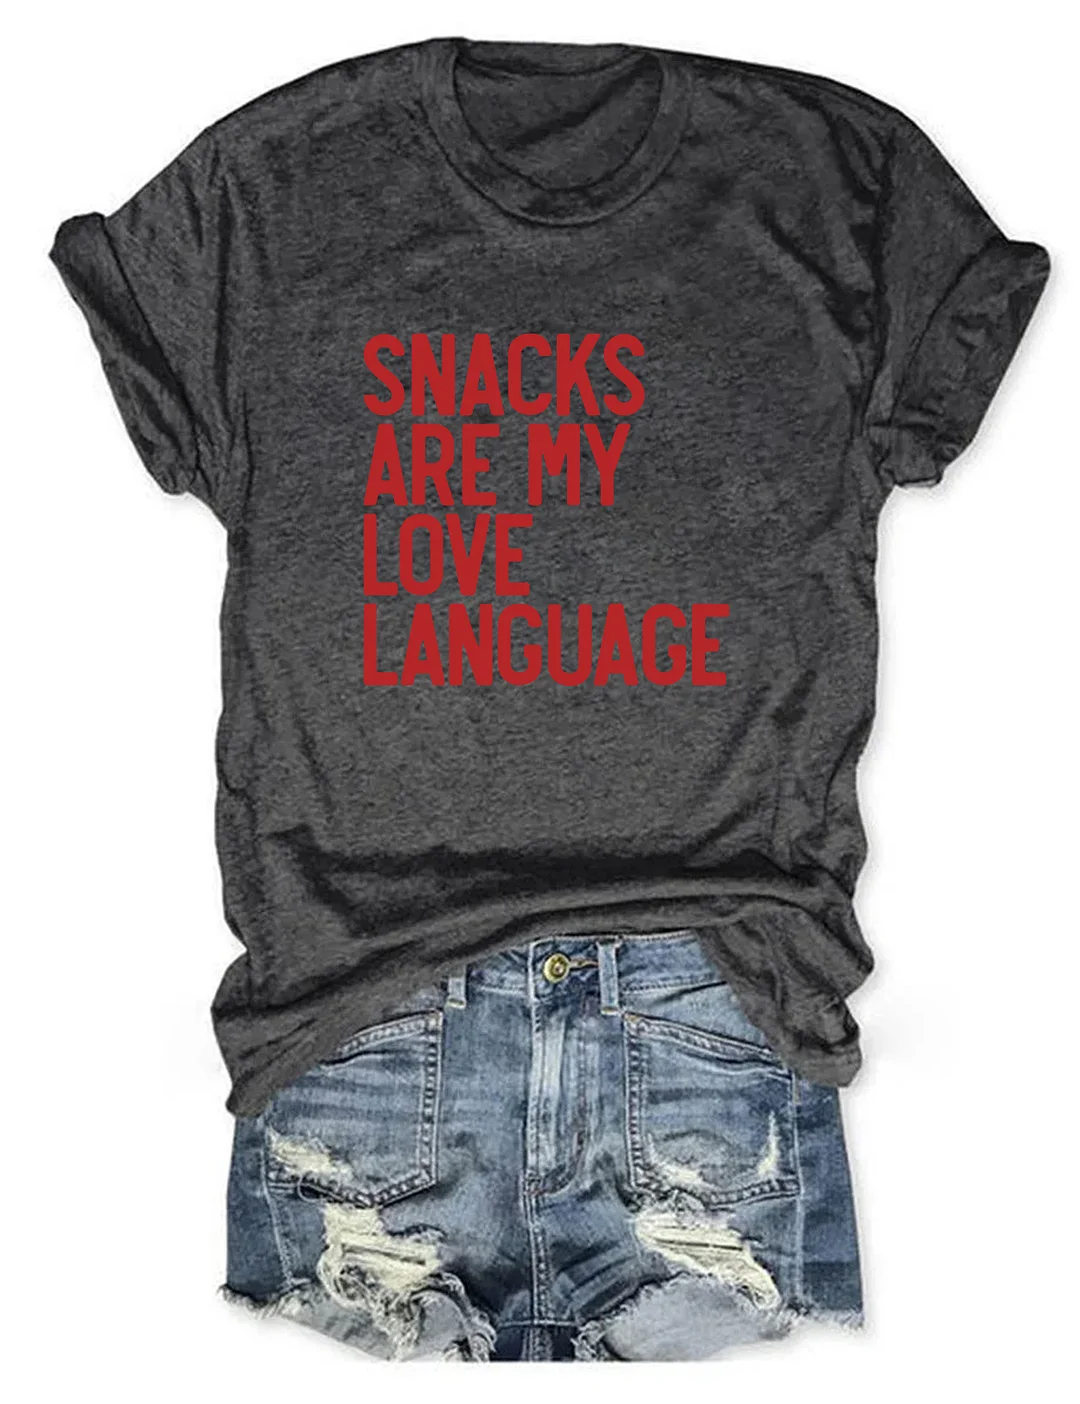 Snacks Are My Love Language T-shirt